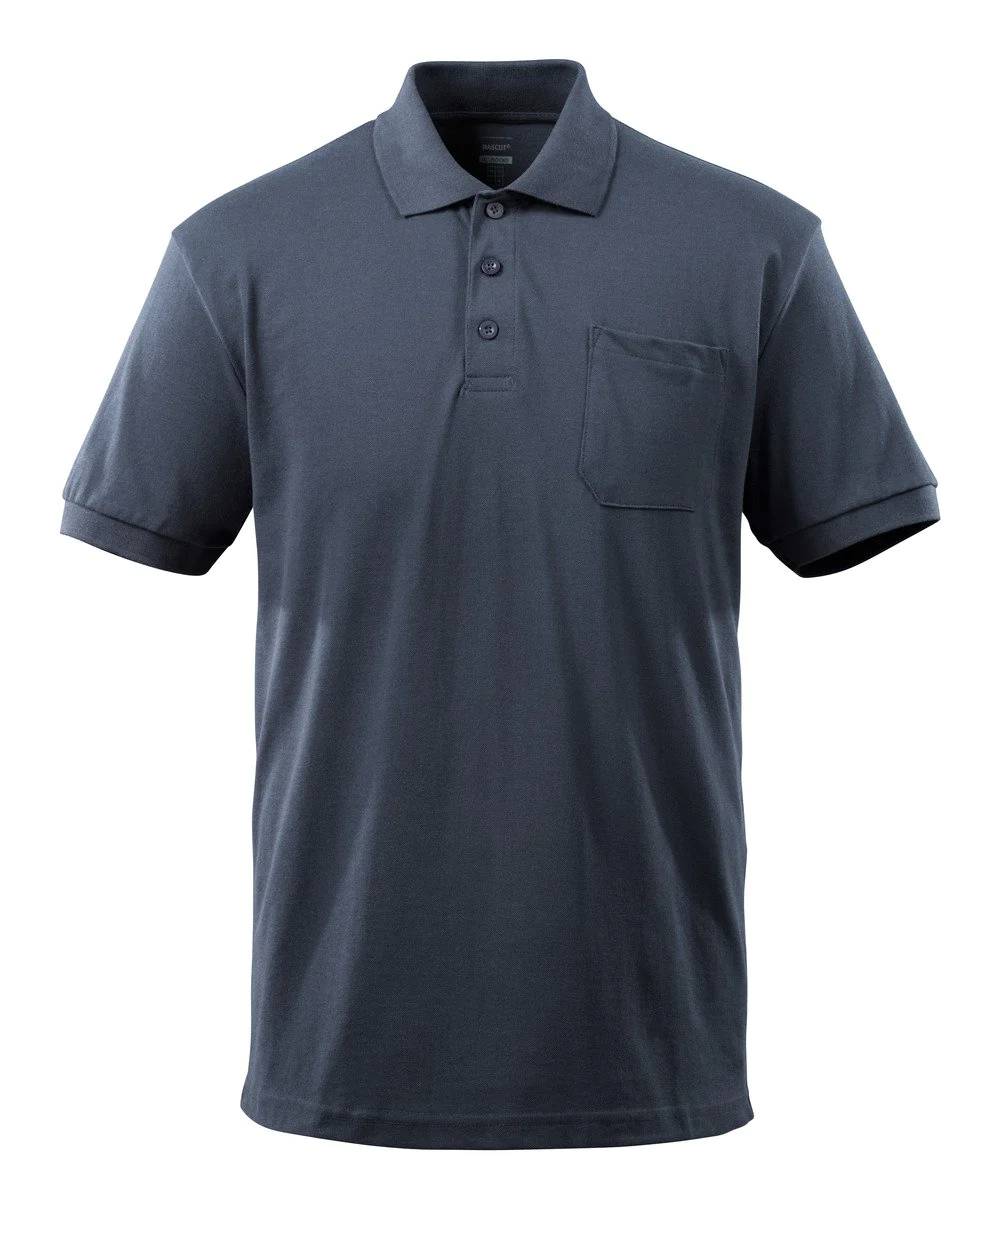 Workwear Polo Shirt Supplier And Wholesaler In Uae United Arab Emirates